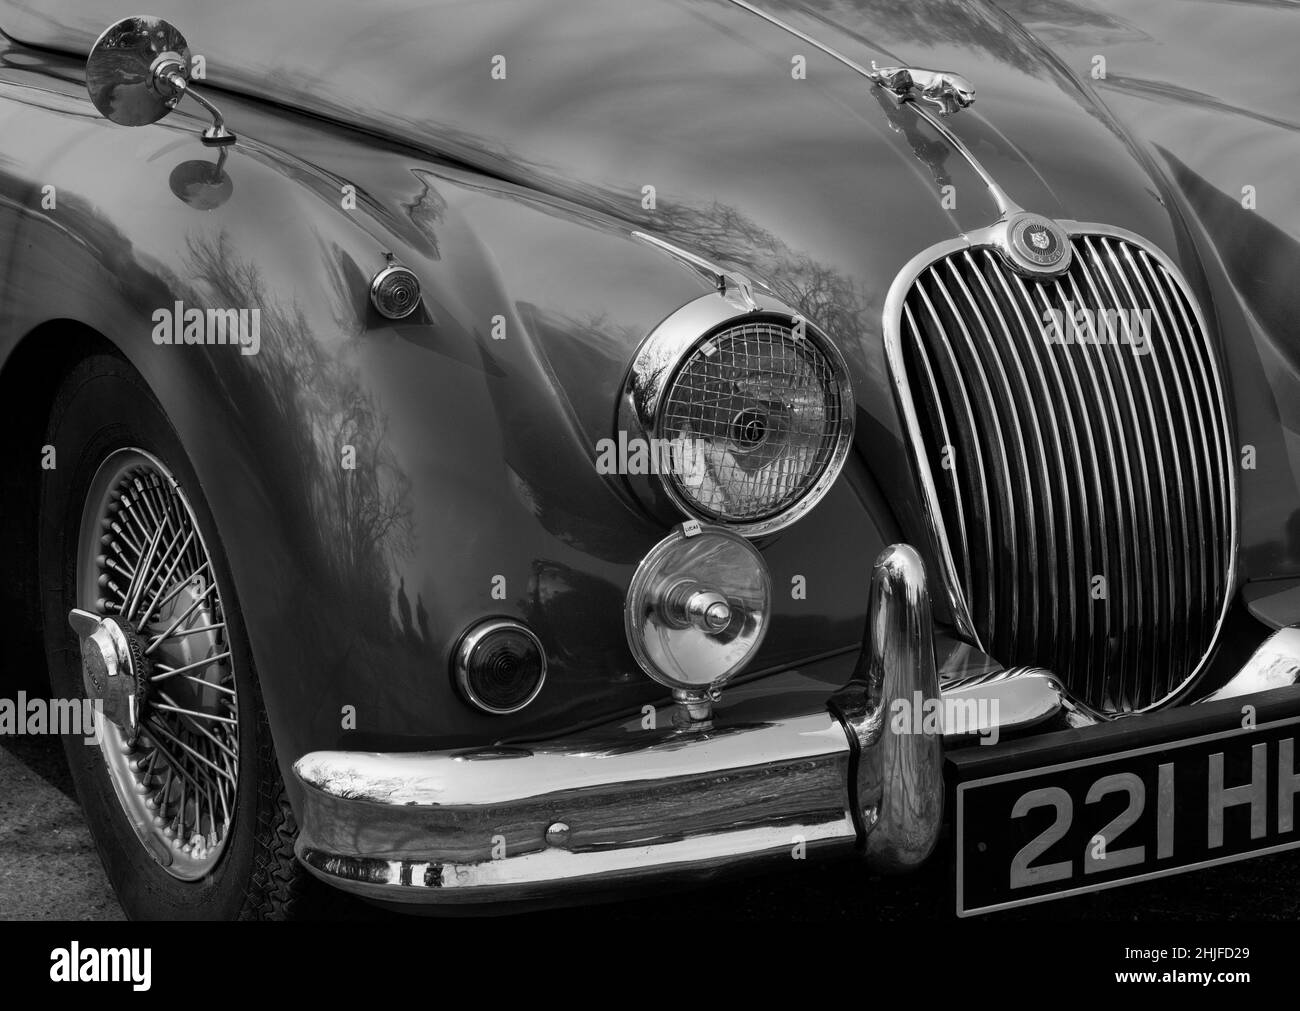 Jaguar XK150 motor car showing bonnet and grill detail Stock Photo